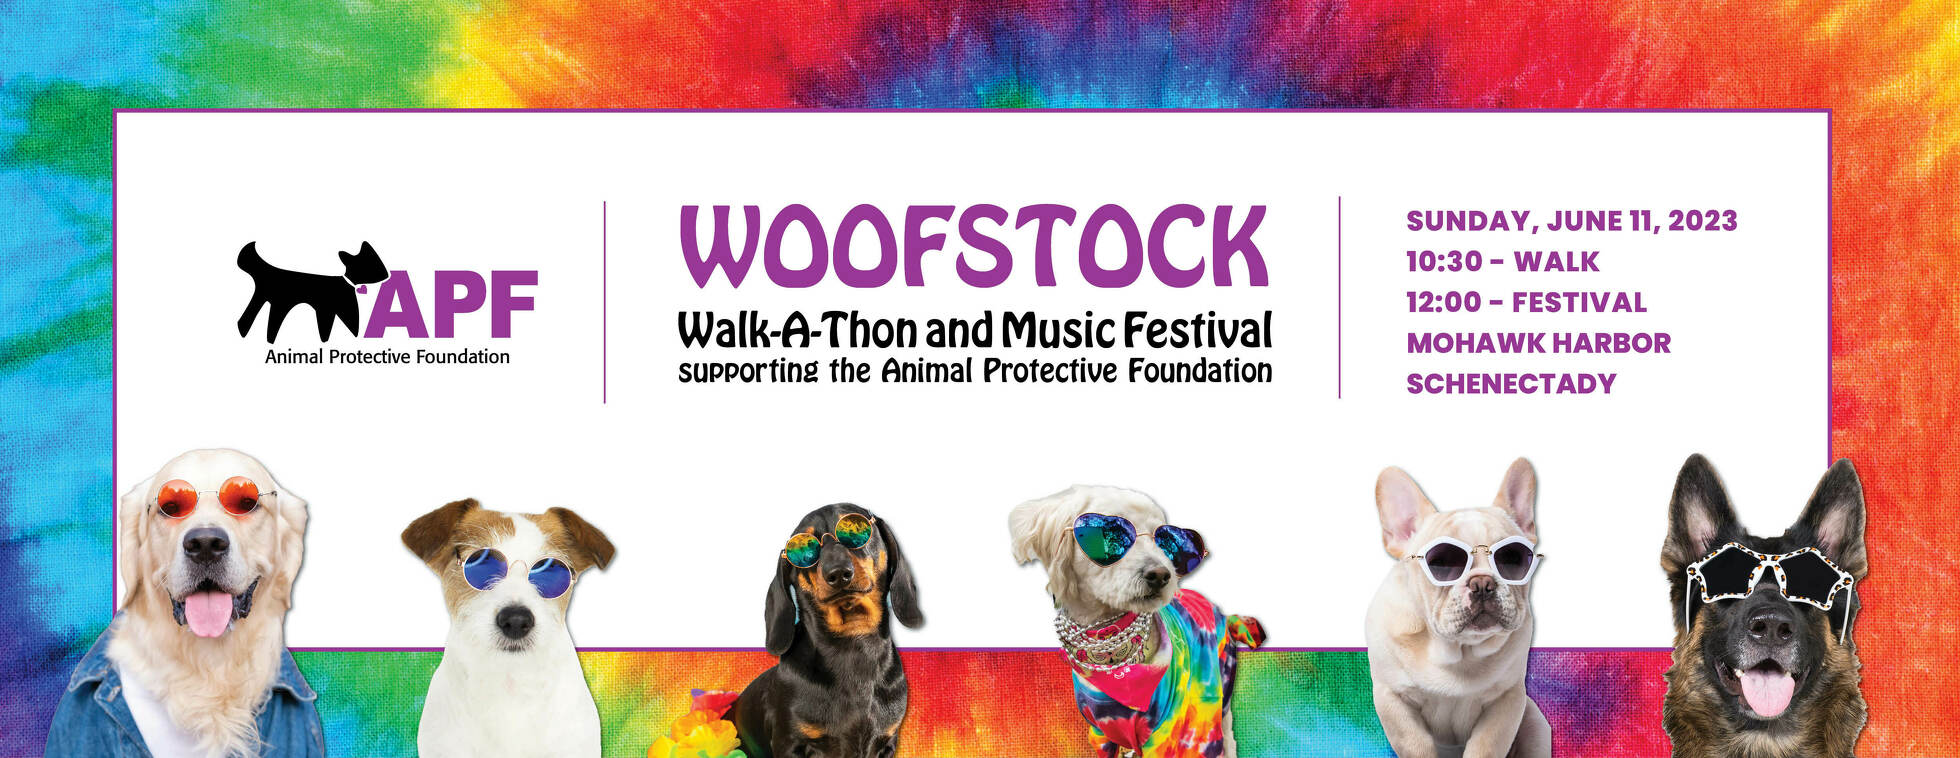 Woofstock Walk-A-Thon